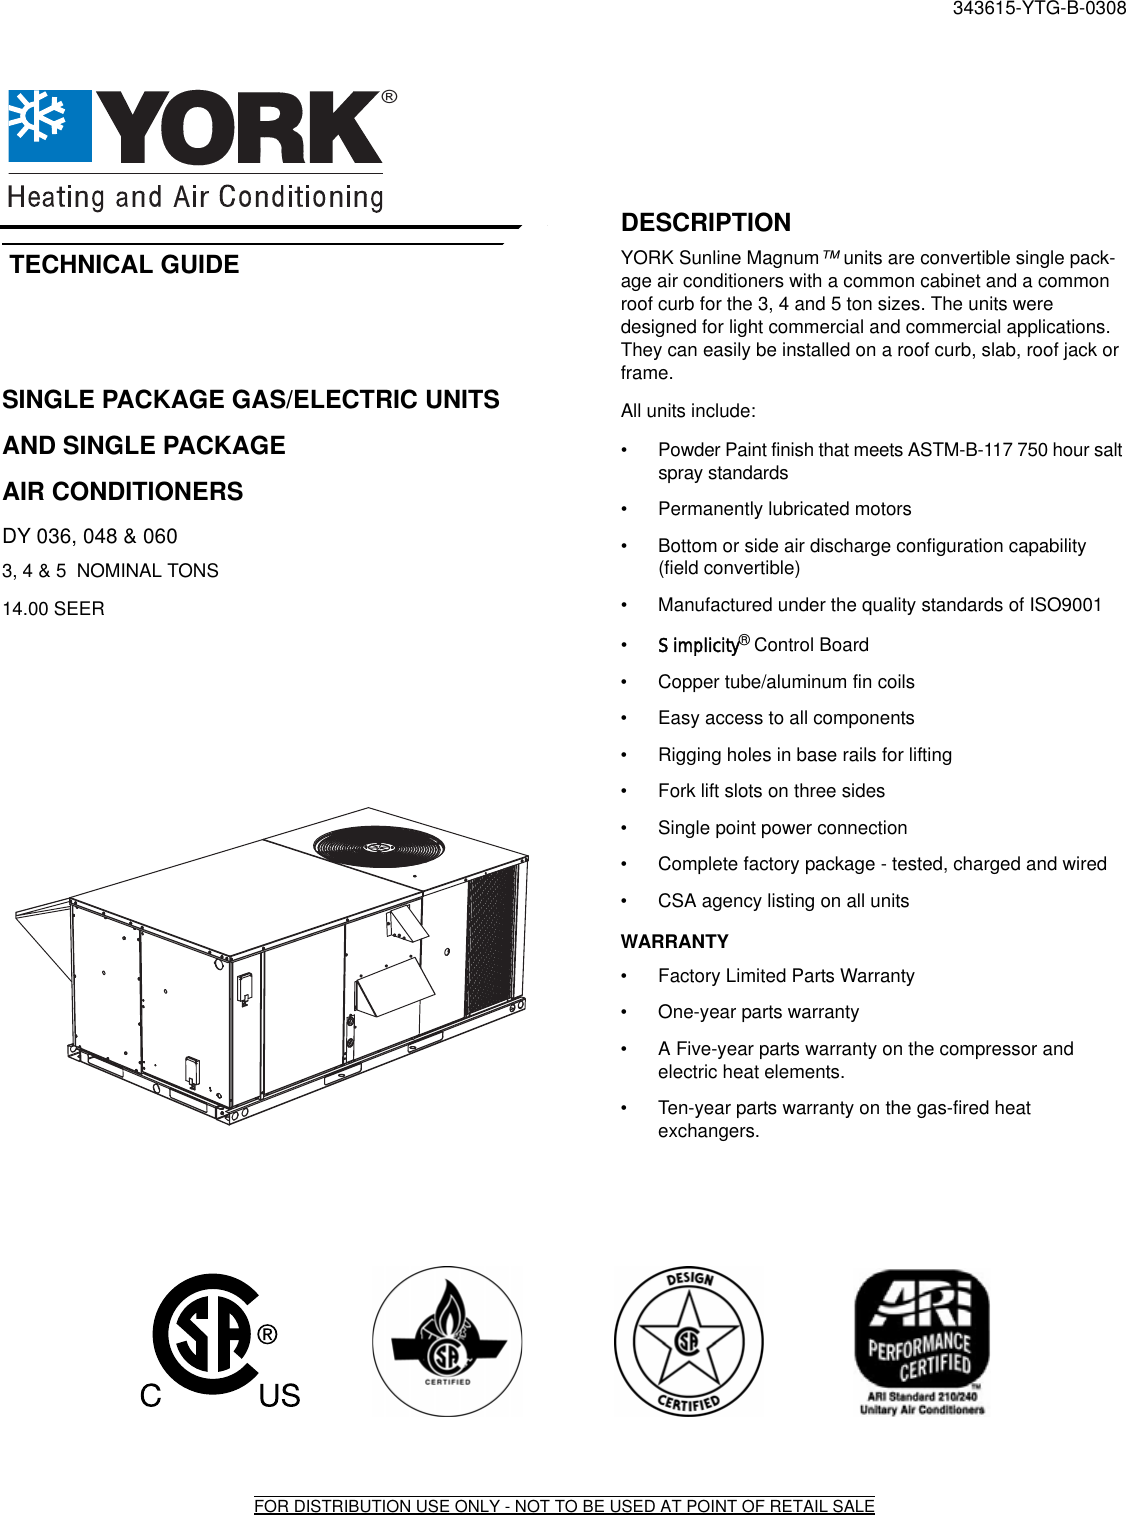 york simplicity control board manual